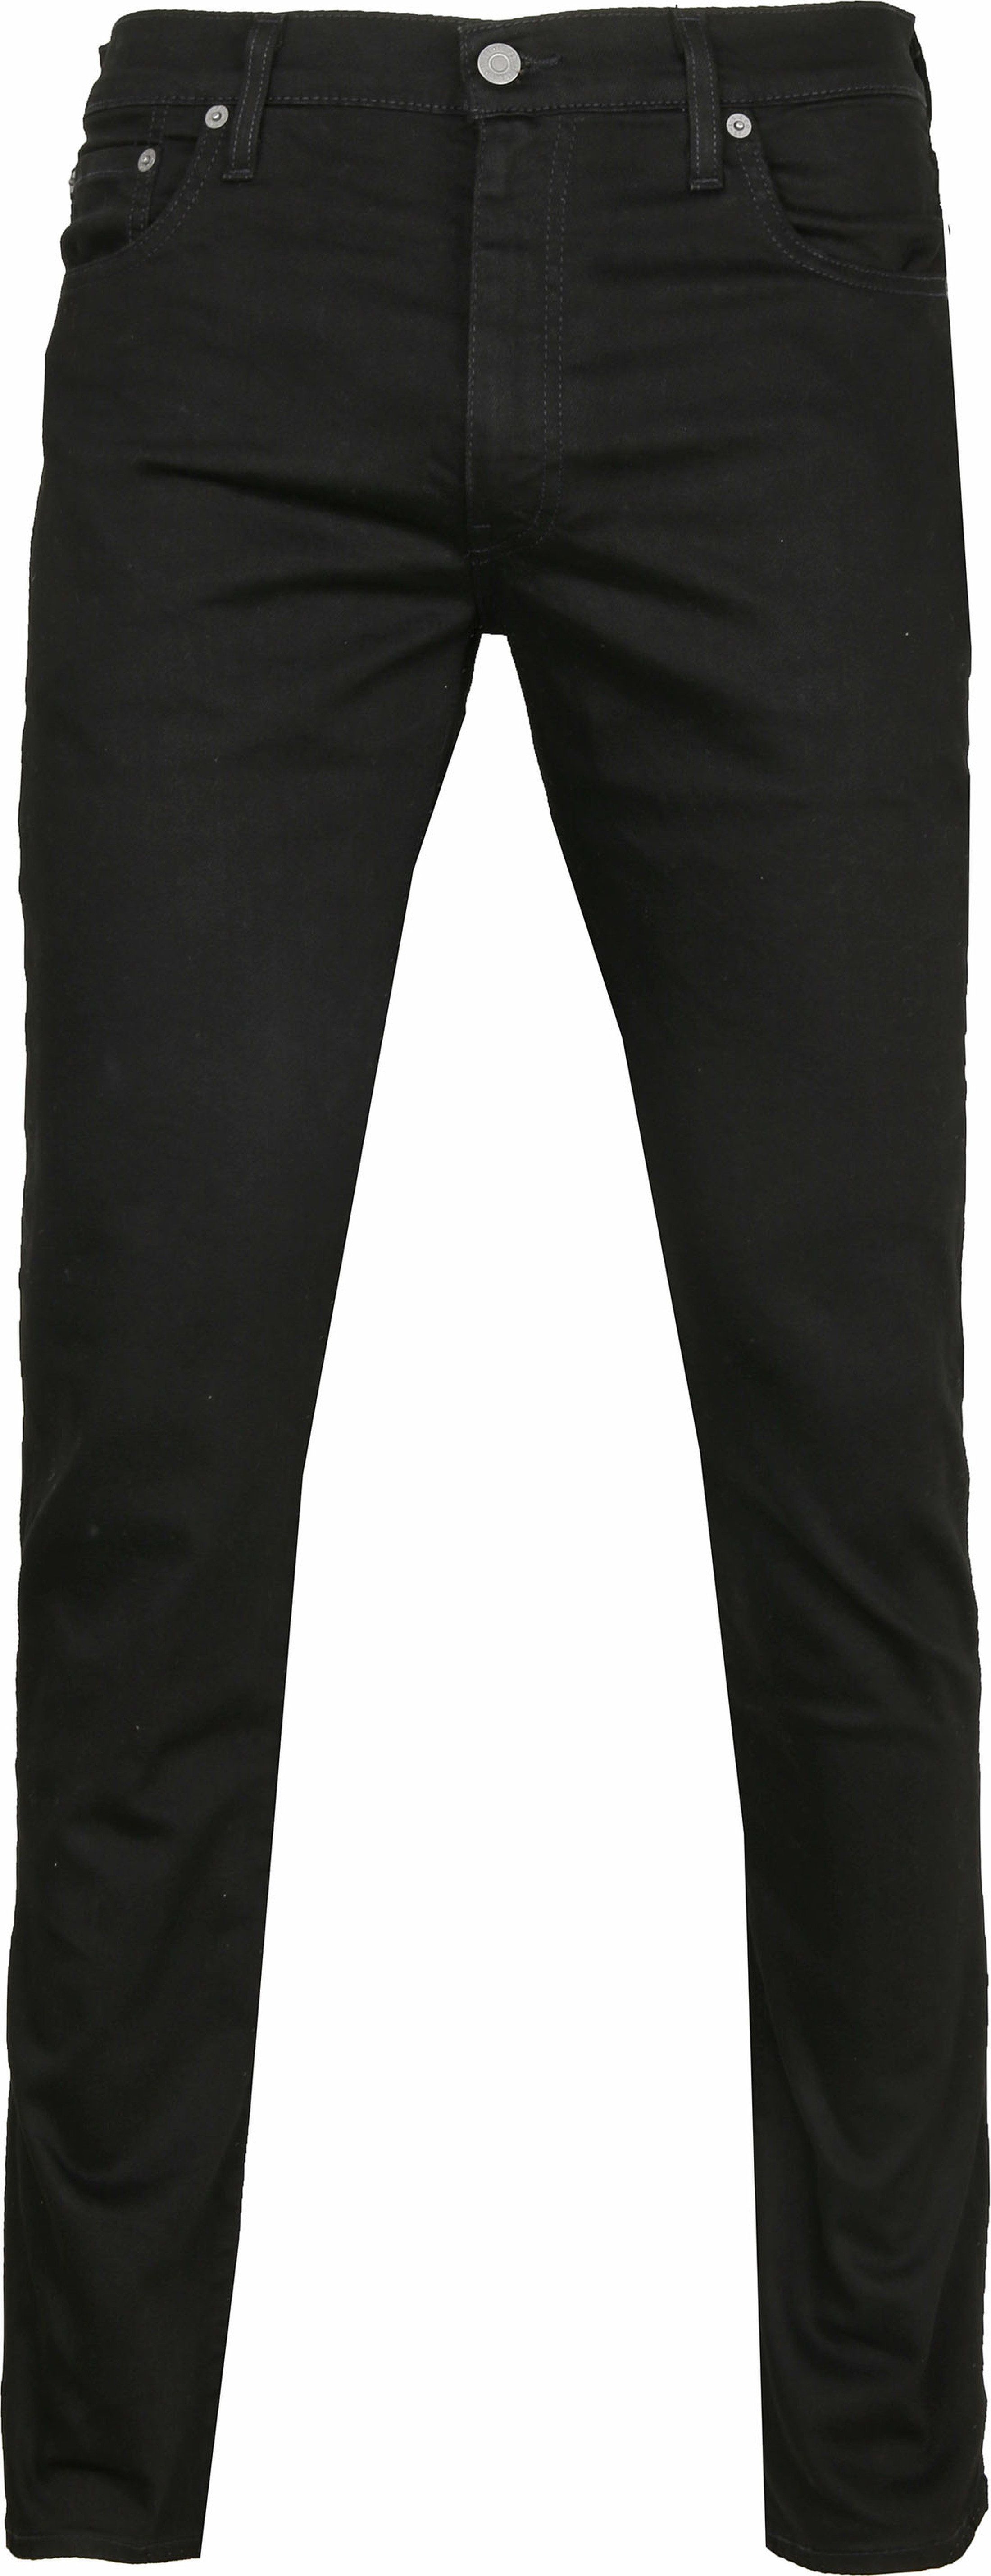 Levi's Jeans 511 Nightshine Noir taille W 31